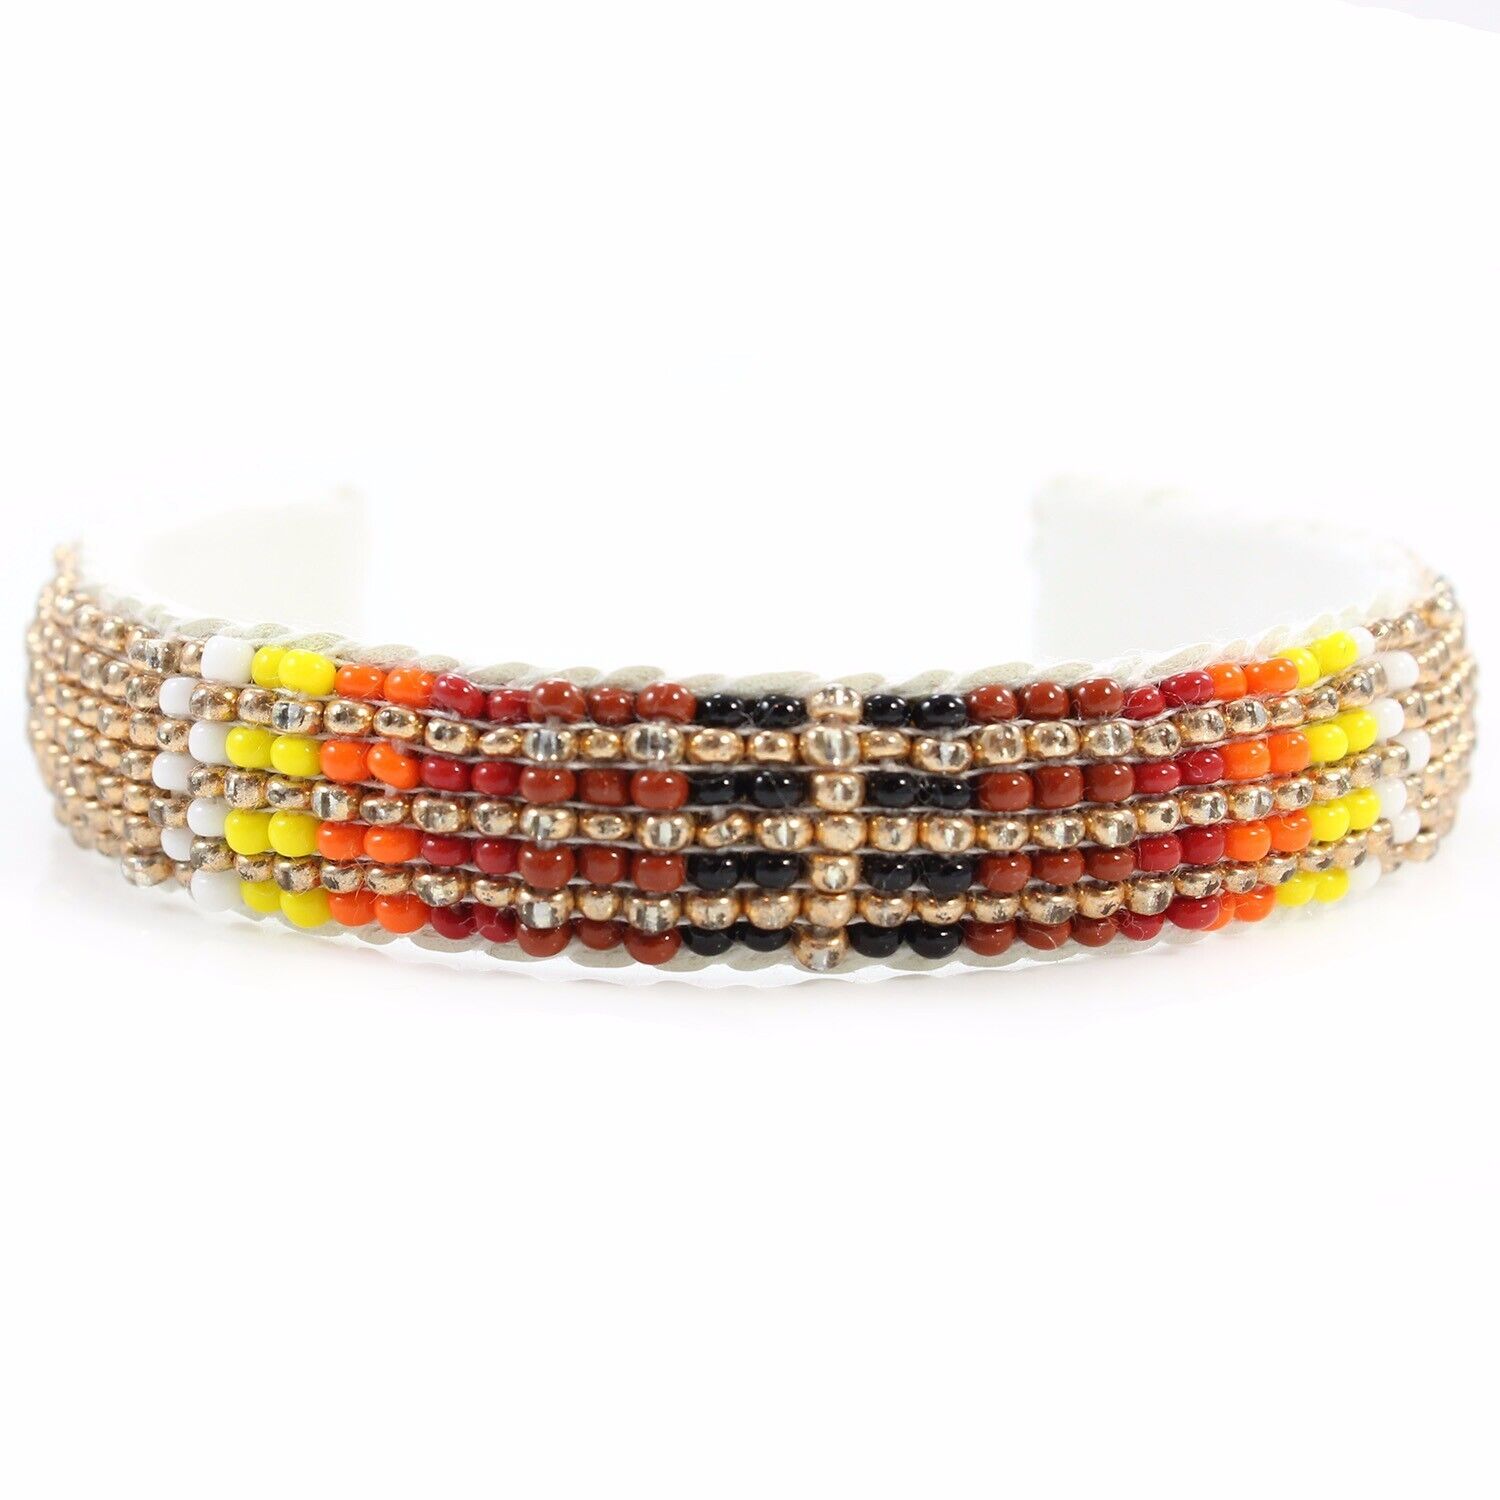 VINTAGE Lakota Beadwork Cuff Bracelet Seven Row Orange Yellow Gold Ombre Beads